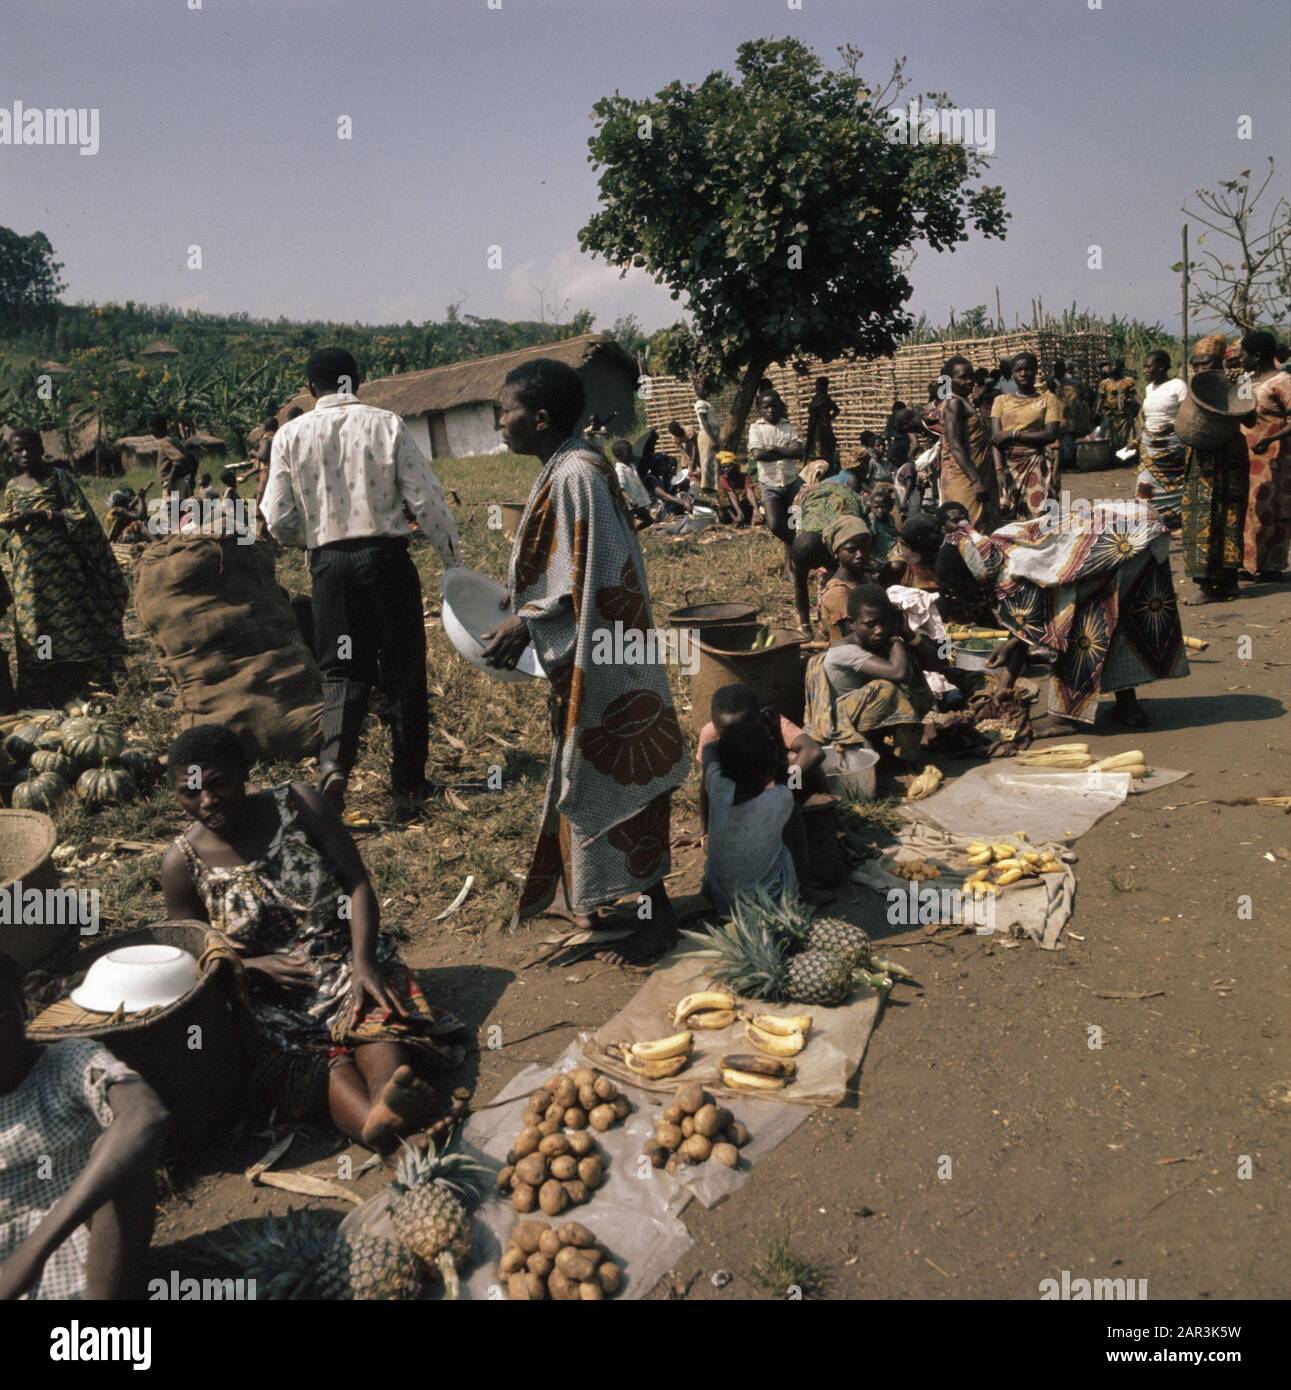 Zaire (ehemals Belgischer Kongo); Markt am flachen Land Datum: 16. August 1973 Standort: Belgisch-Kongo, Zaire Schlüsselwörter: Märkte Stockfoto